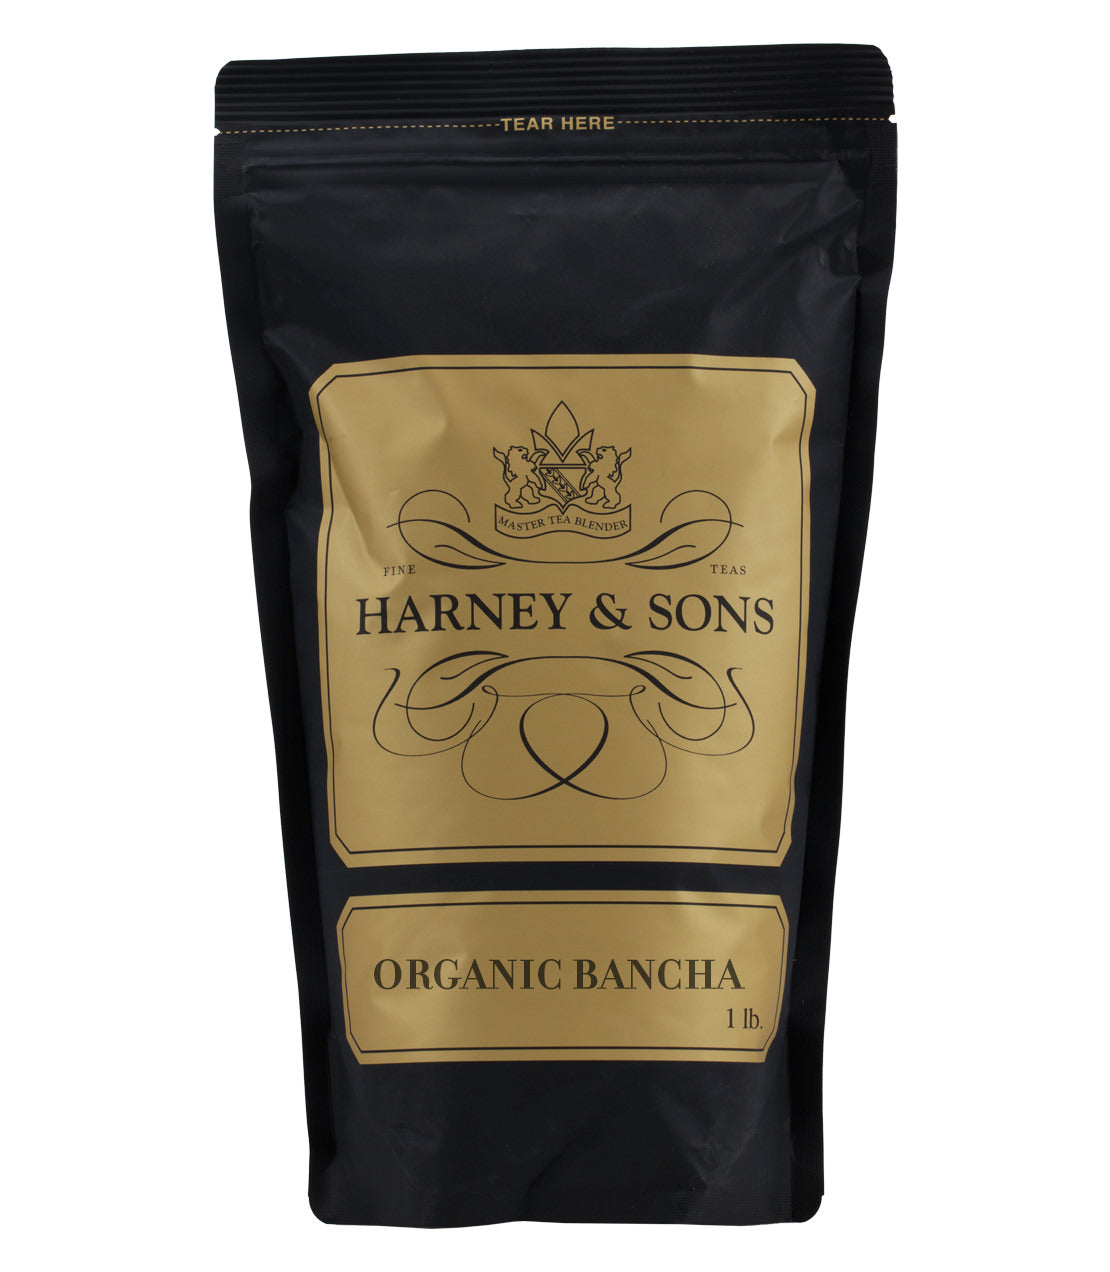 Organic Bancha - Loose 1 lb. Bag - Harney & Sons Fine Teas